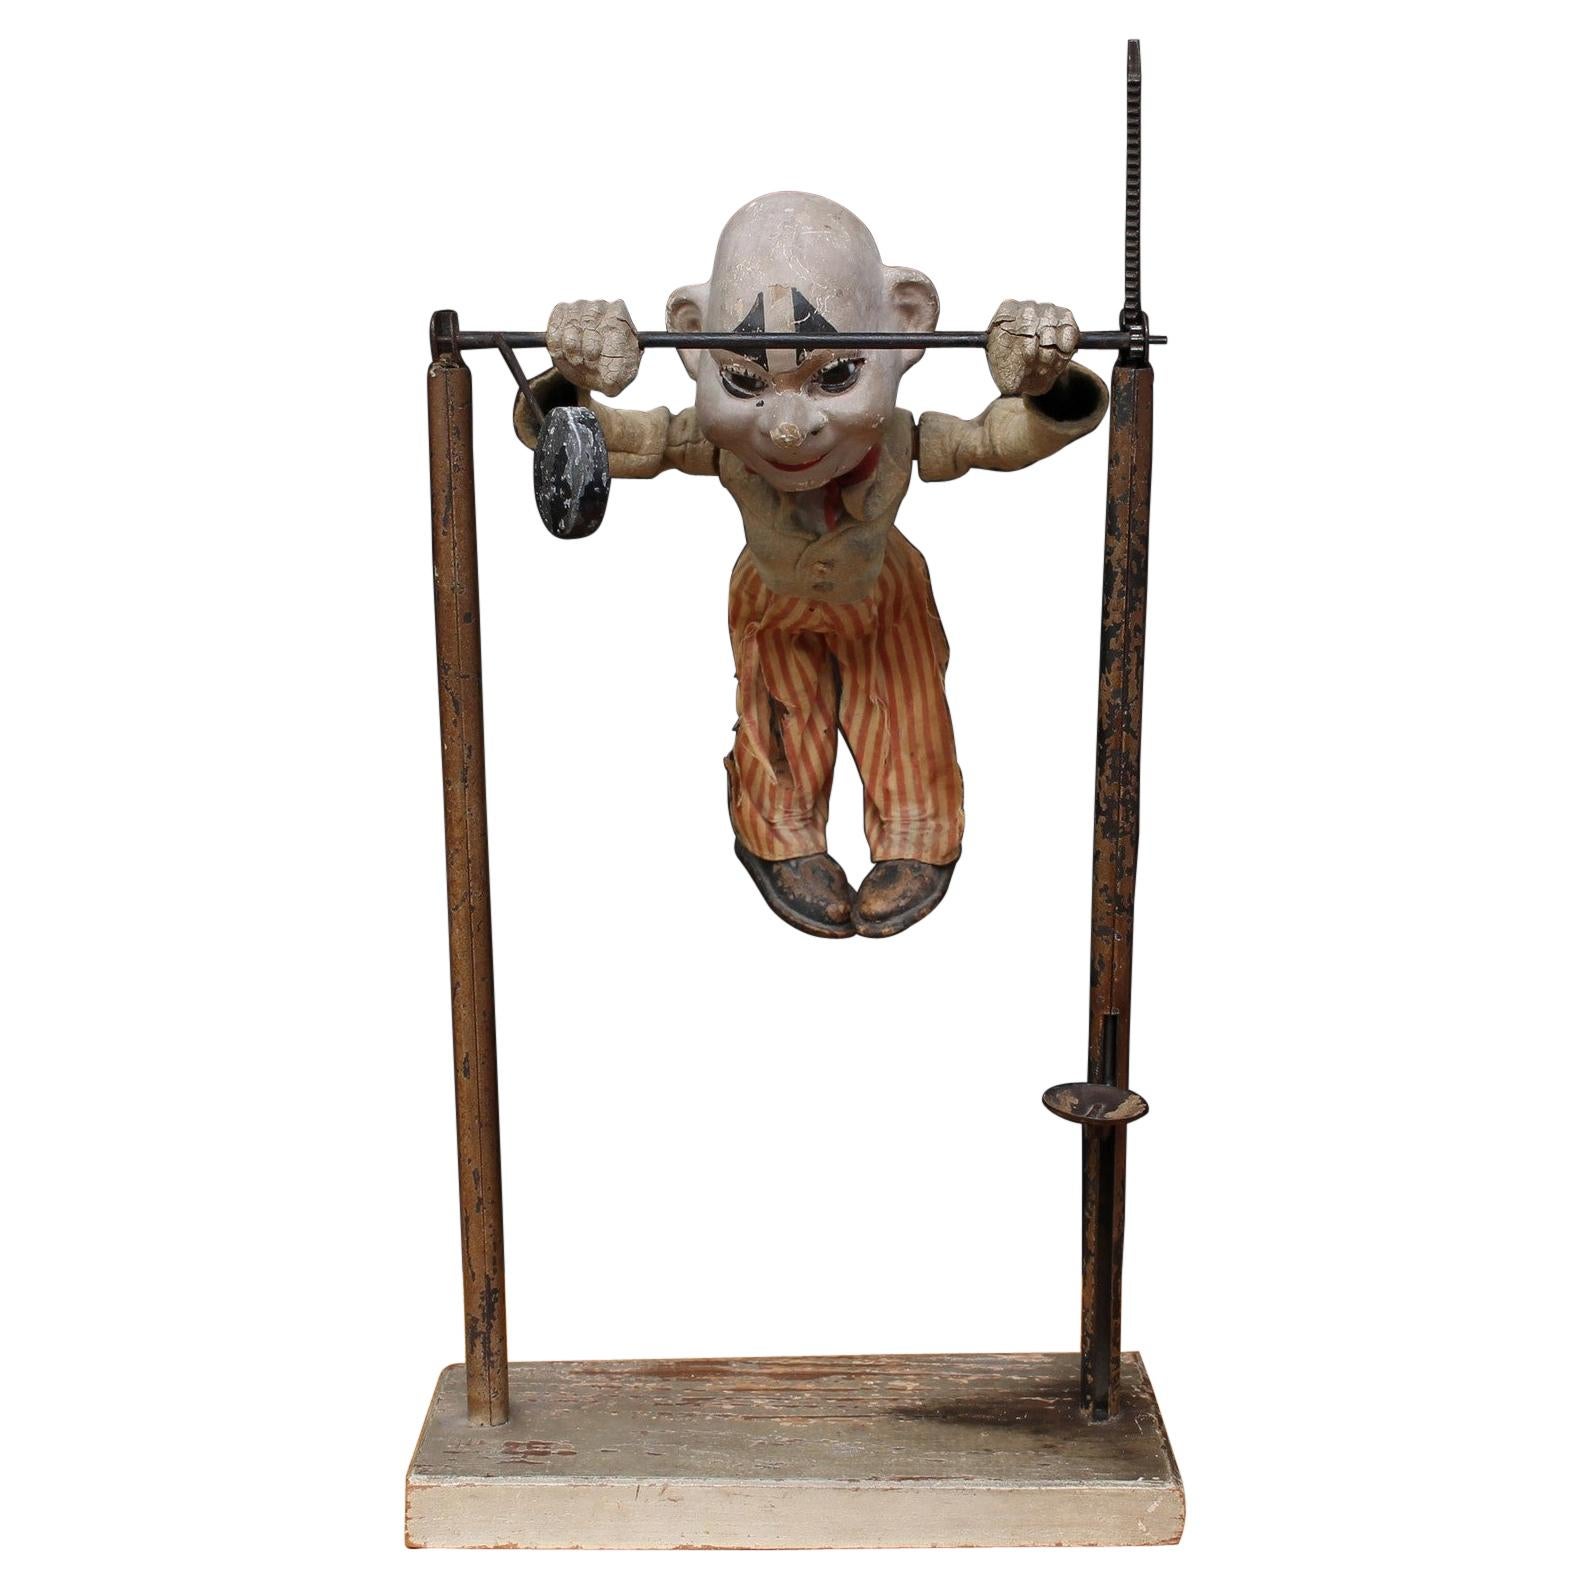 Mechanical Hand-Crank Acrobatic Clown, c.1895-1910